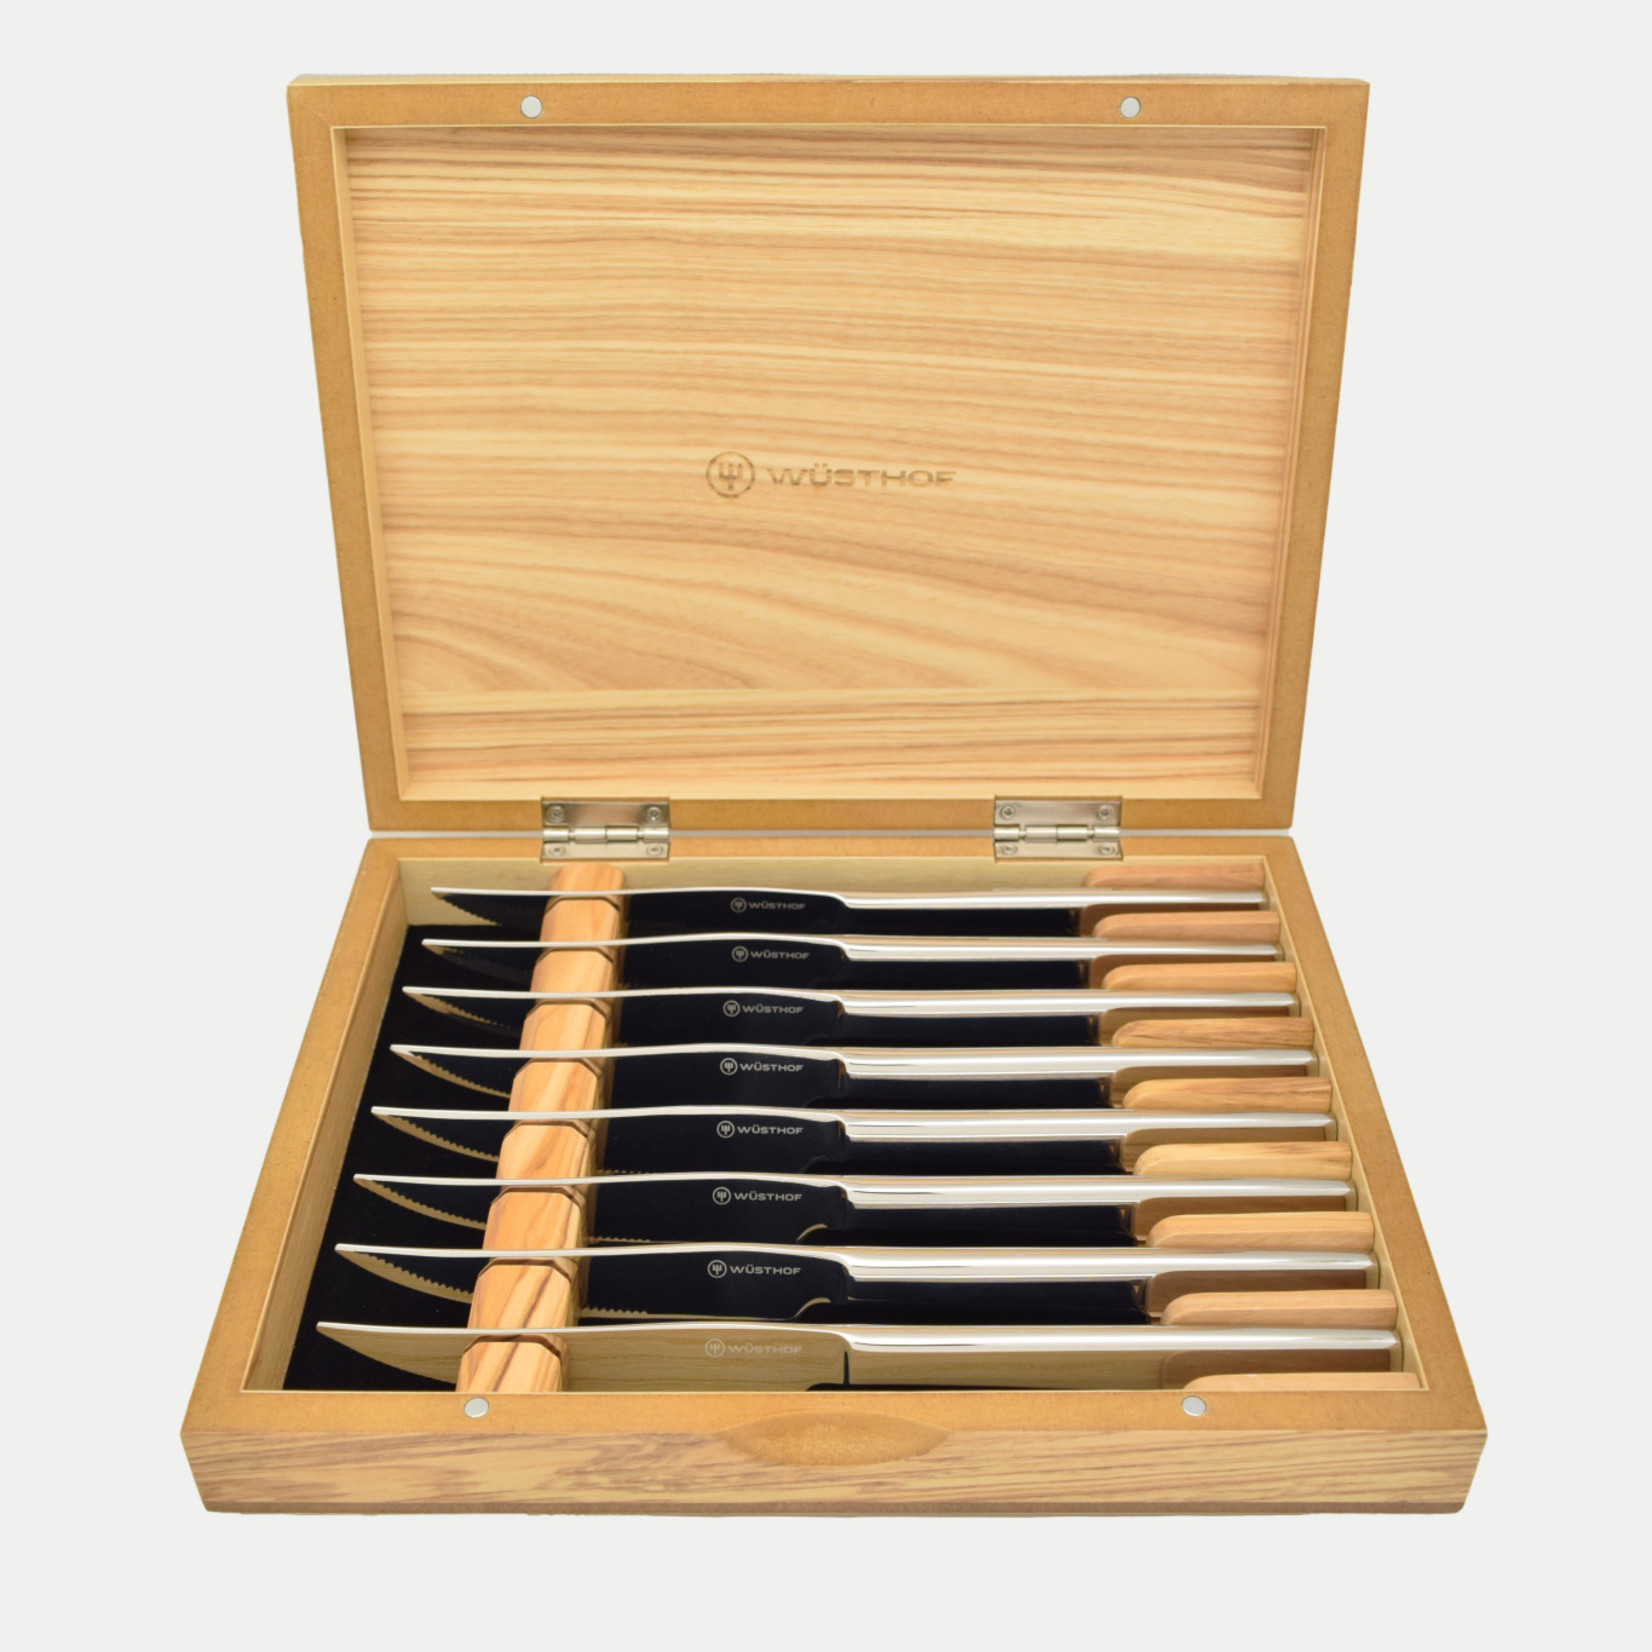 Wusthof Stainless 8-piece Steak Knife Set